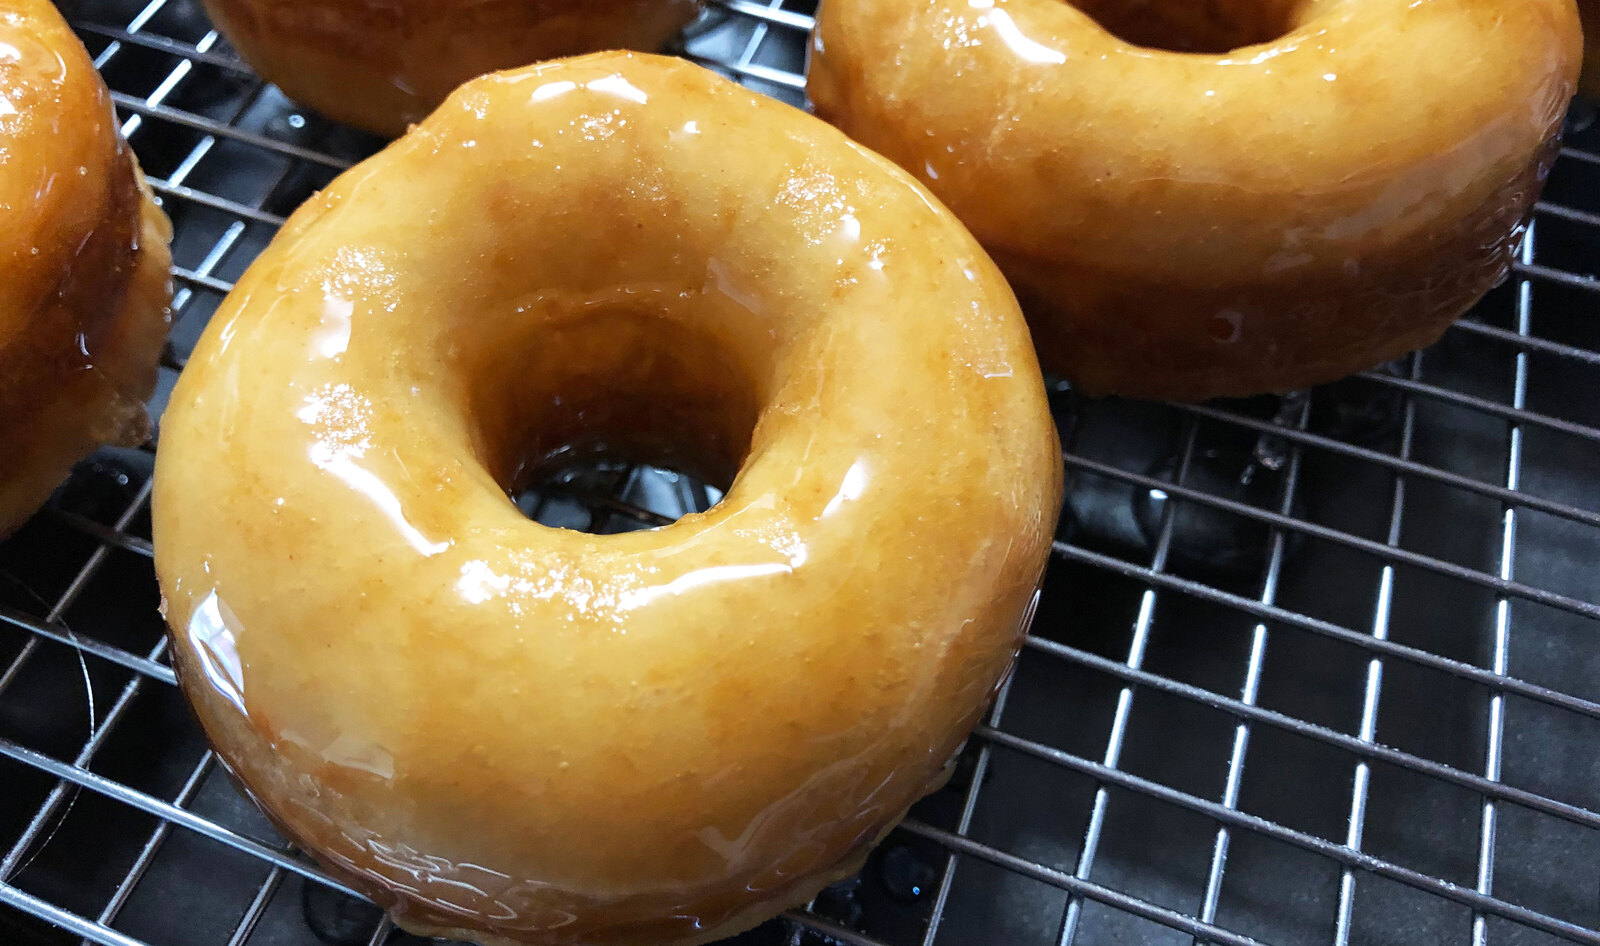 New Shop Brings Vegan Brioche Doughnuts to Maine